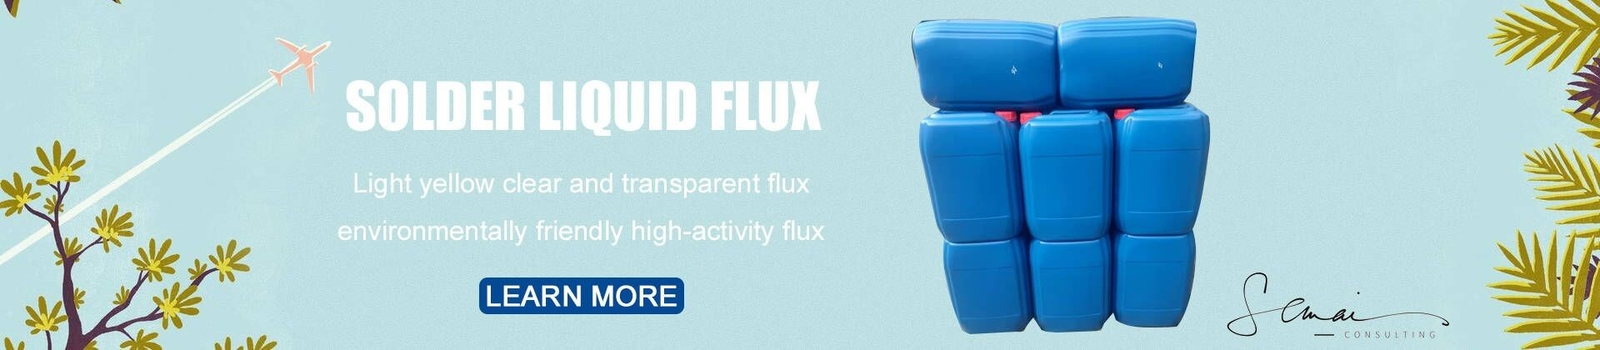 Solder Liquid Flux